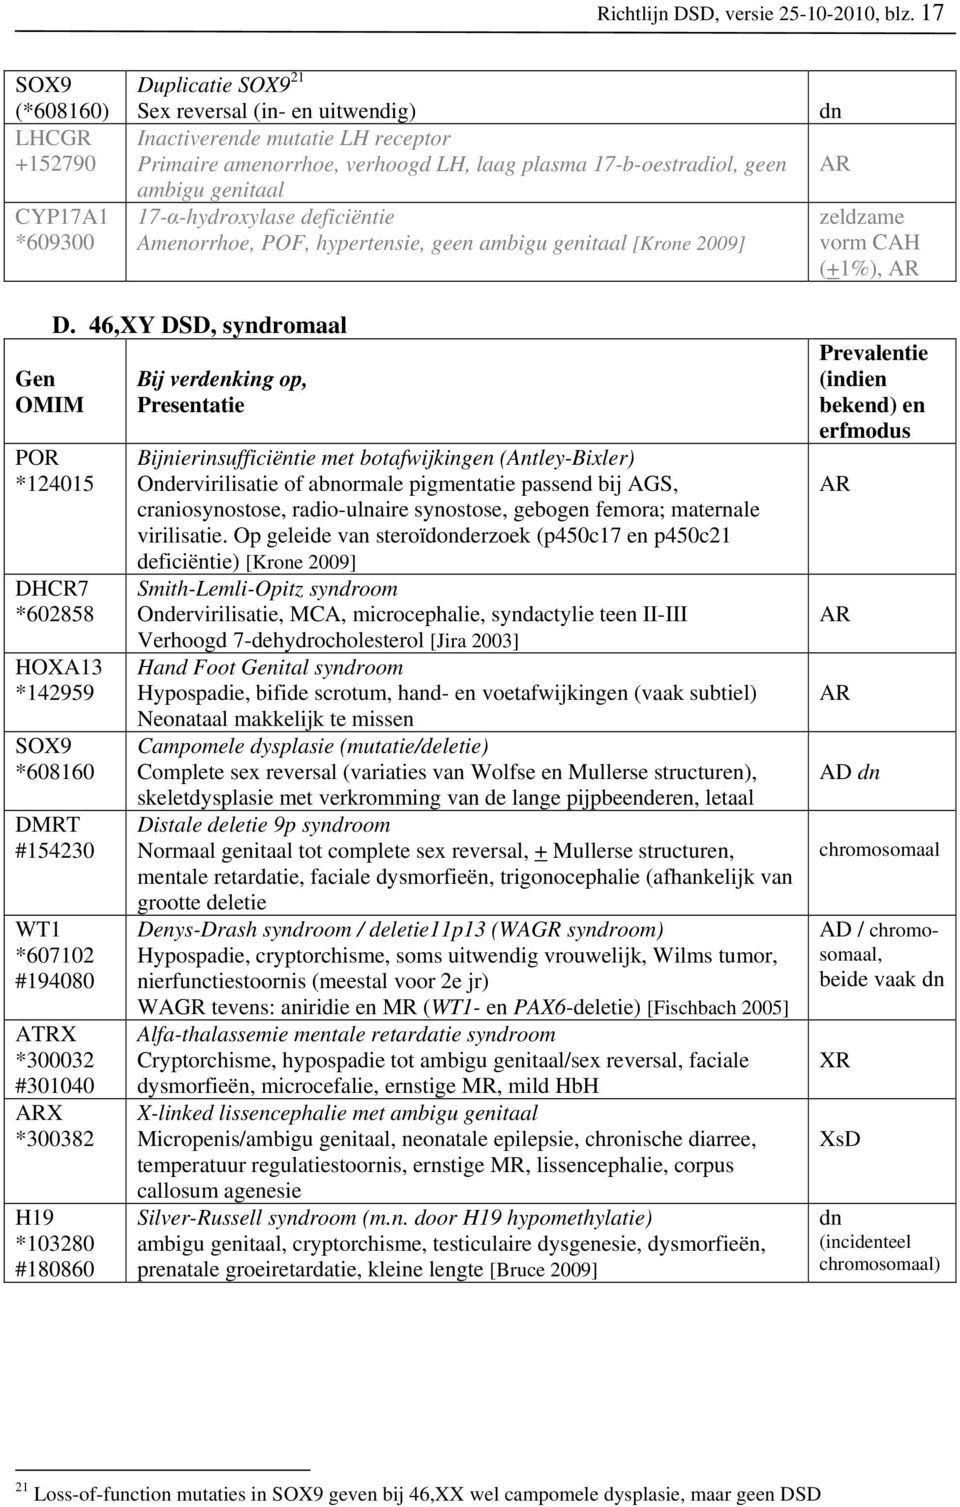 geen ambigu genitaal 17-α-hydroxylase deficiëntie Amenorrhoe, POF, hypertensie, geen ambigu genitaal [Krone 2009] dn zeldzame vorm CAH (+1%), Gen OMIM D.